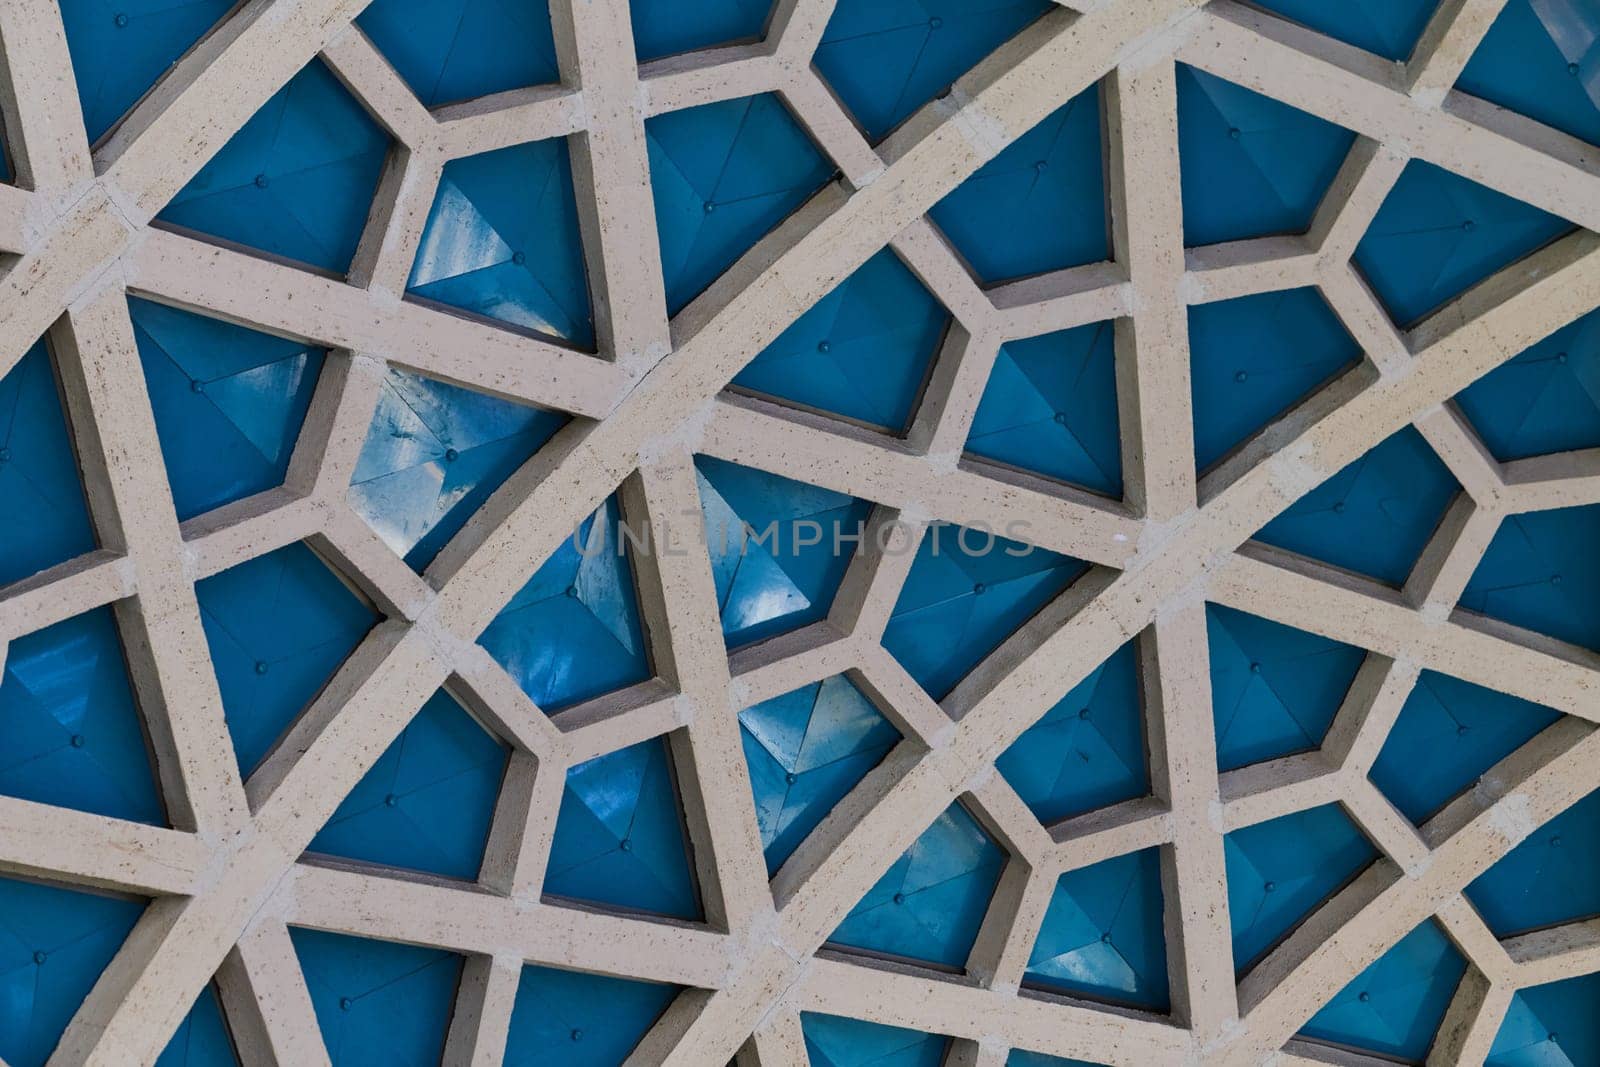 Architectural detail texture background with oriental hexagonal grid pattern by dotshock